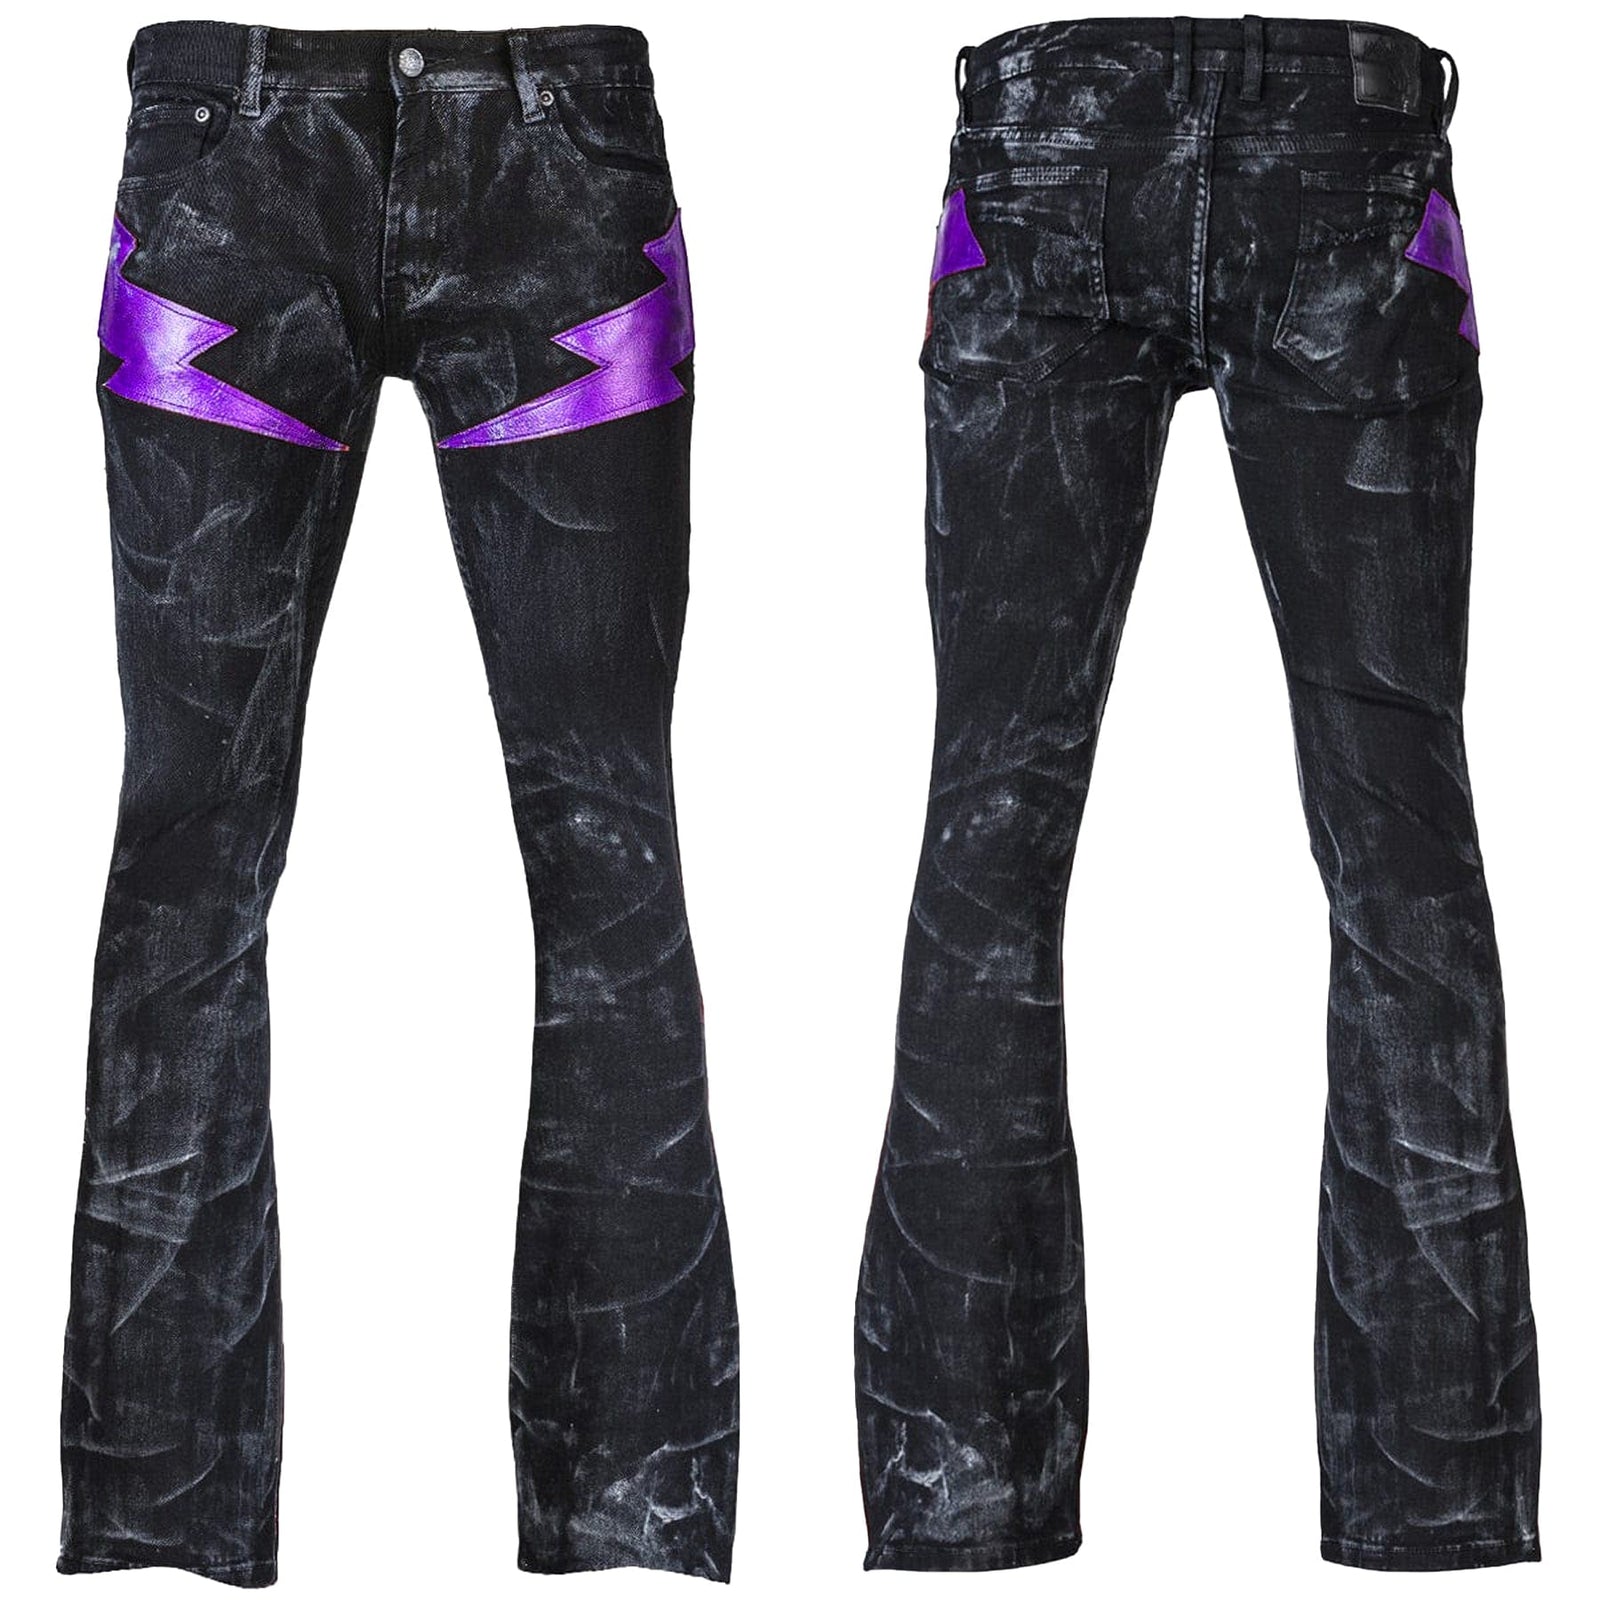 Custom Chop Shop Pants Wornstar Custom Jeans - Thunderstruck Purple